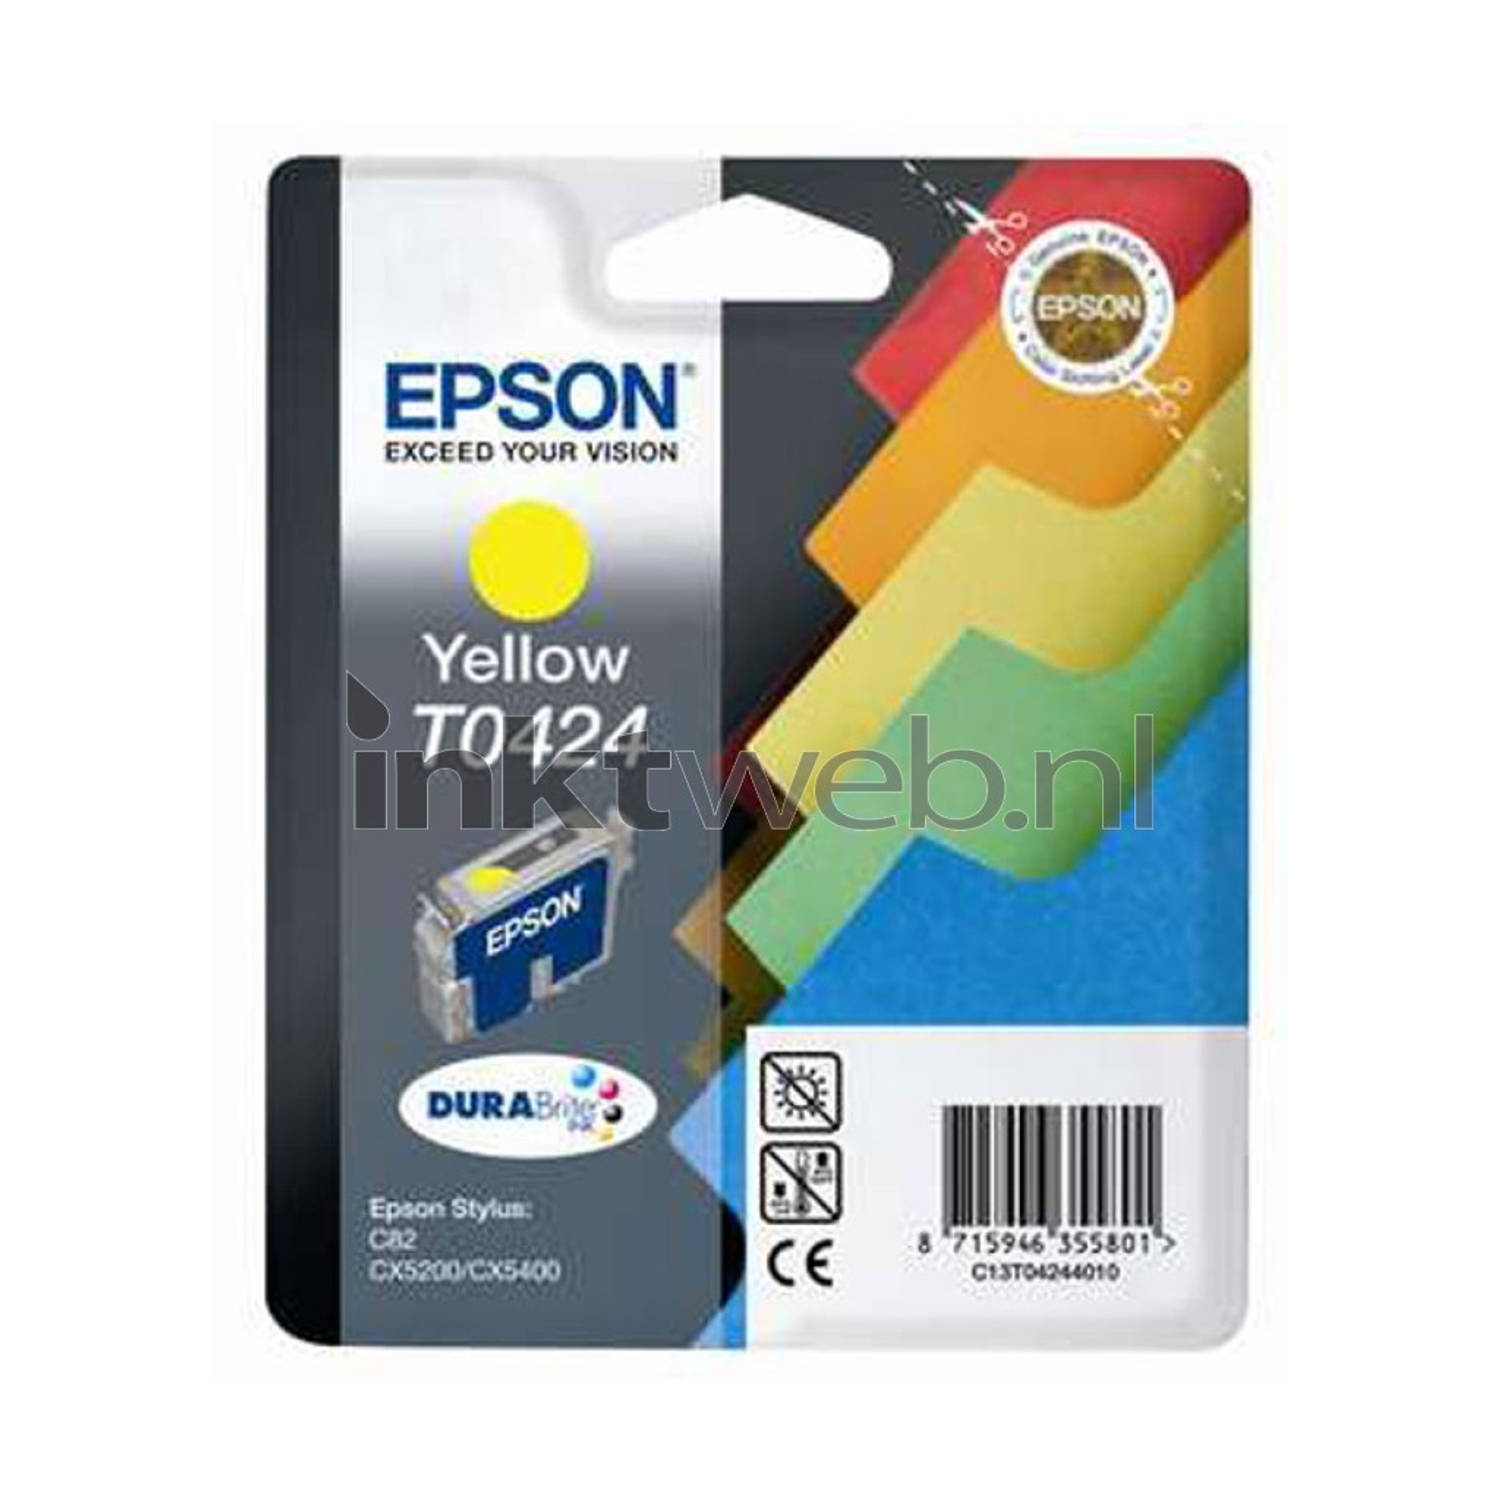 Epson T0424 geel cartridge